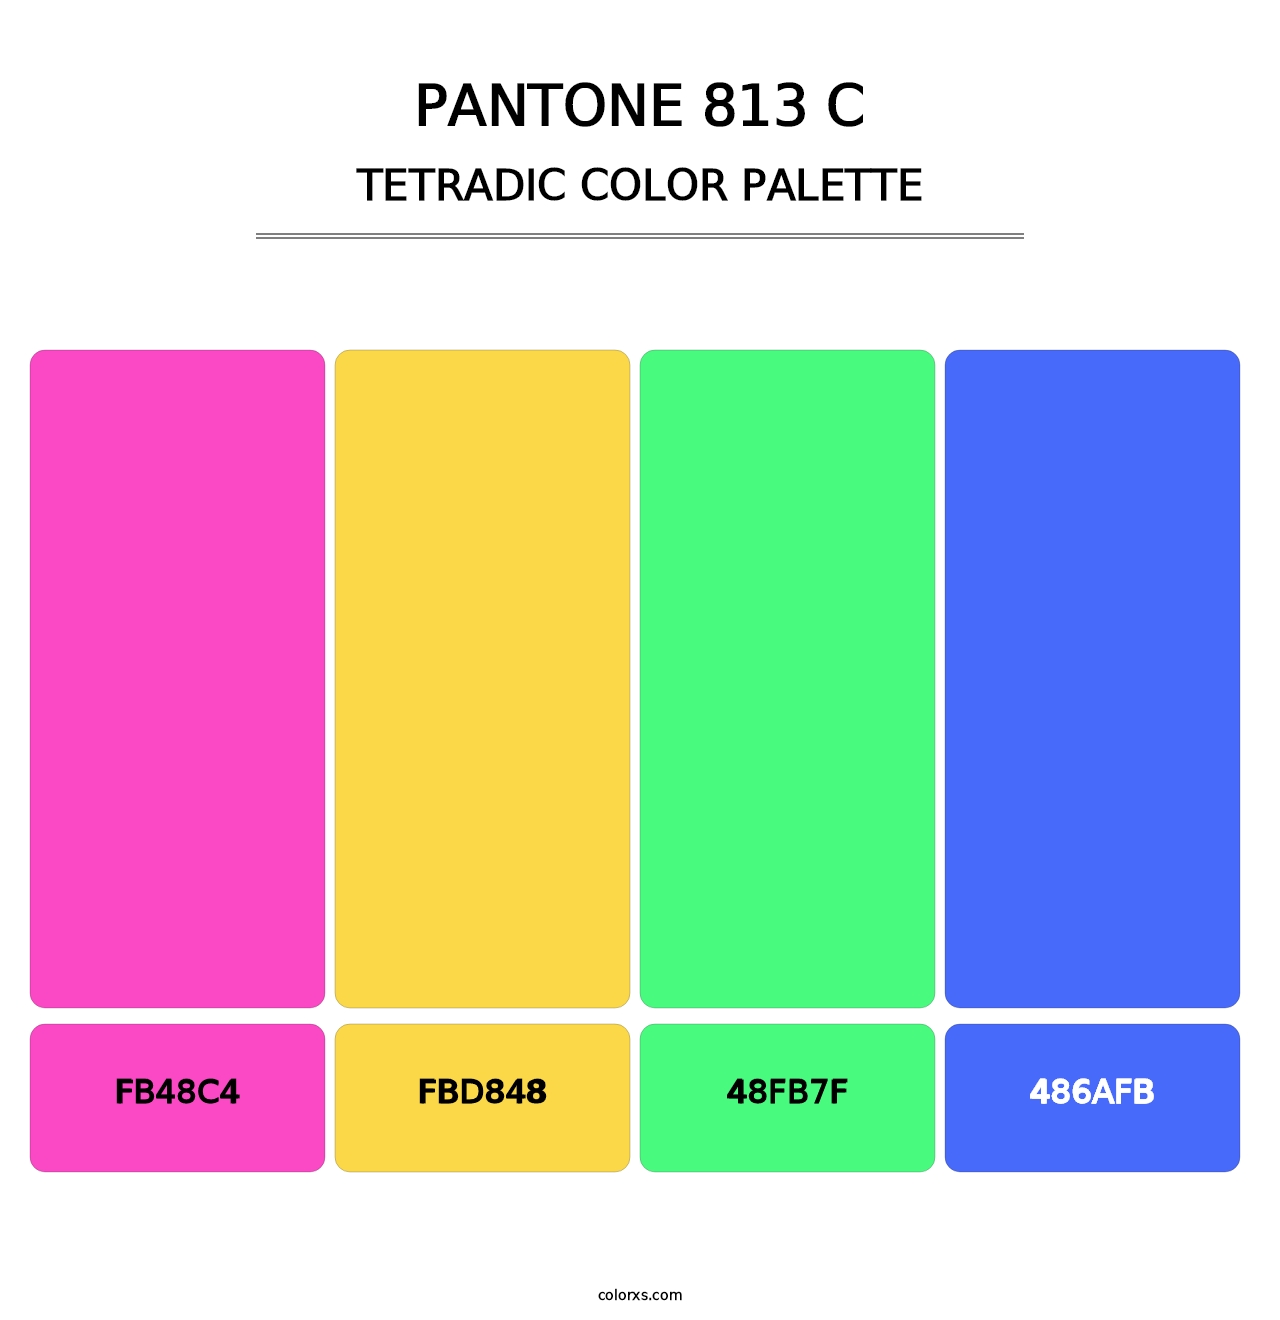 PANTONE 813 C - Tetradic Color Palette